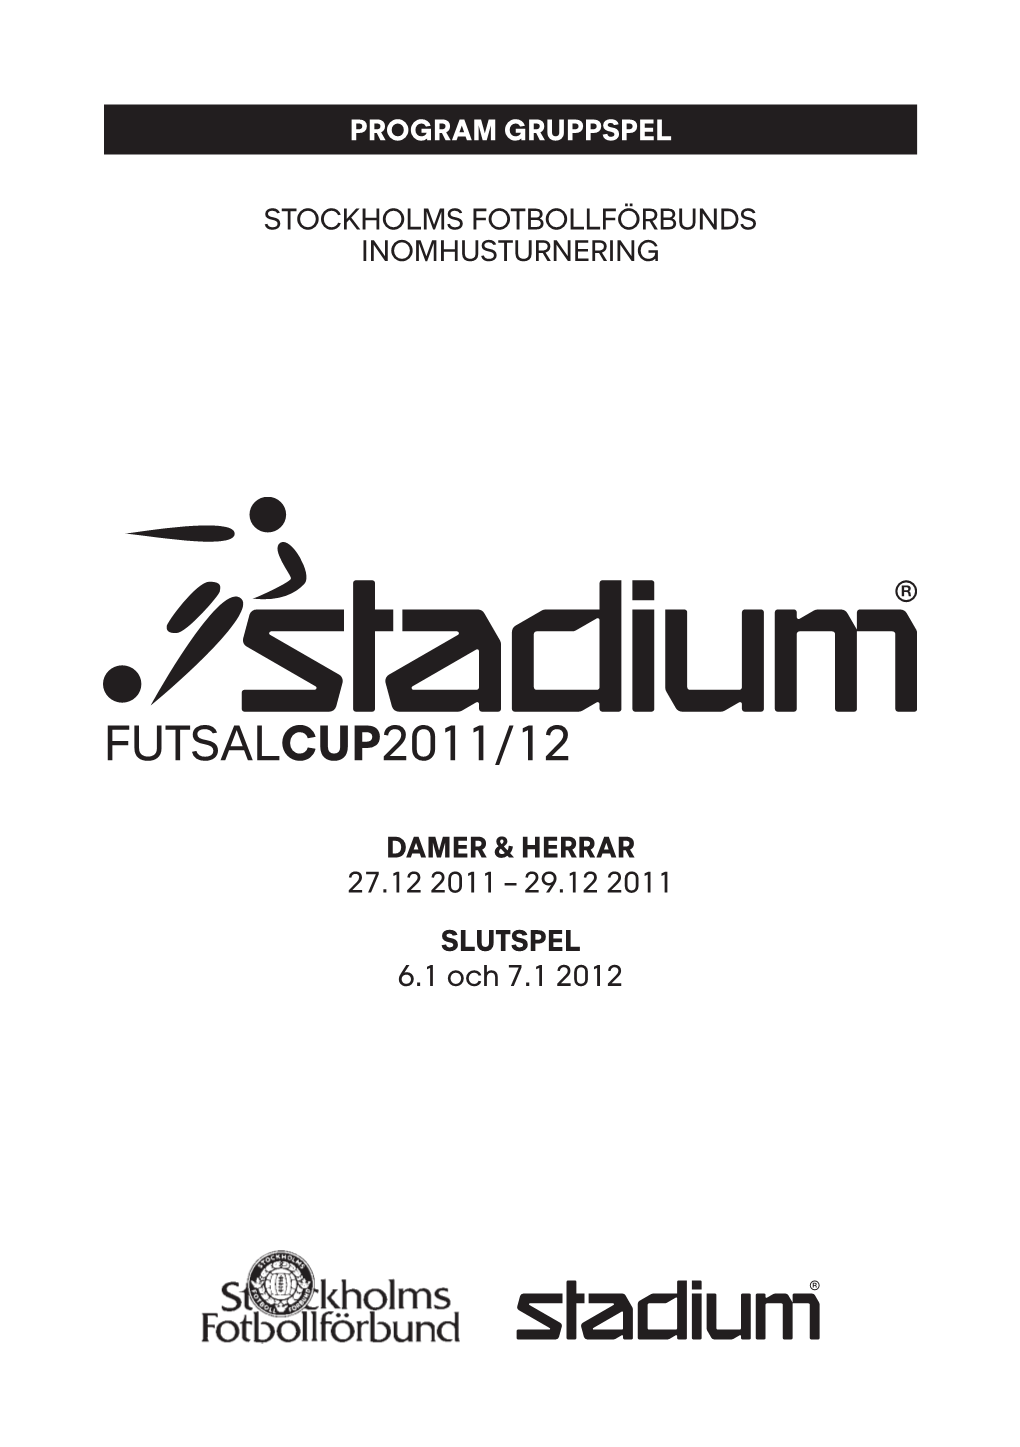 Futsalcup2011/12